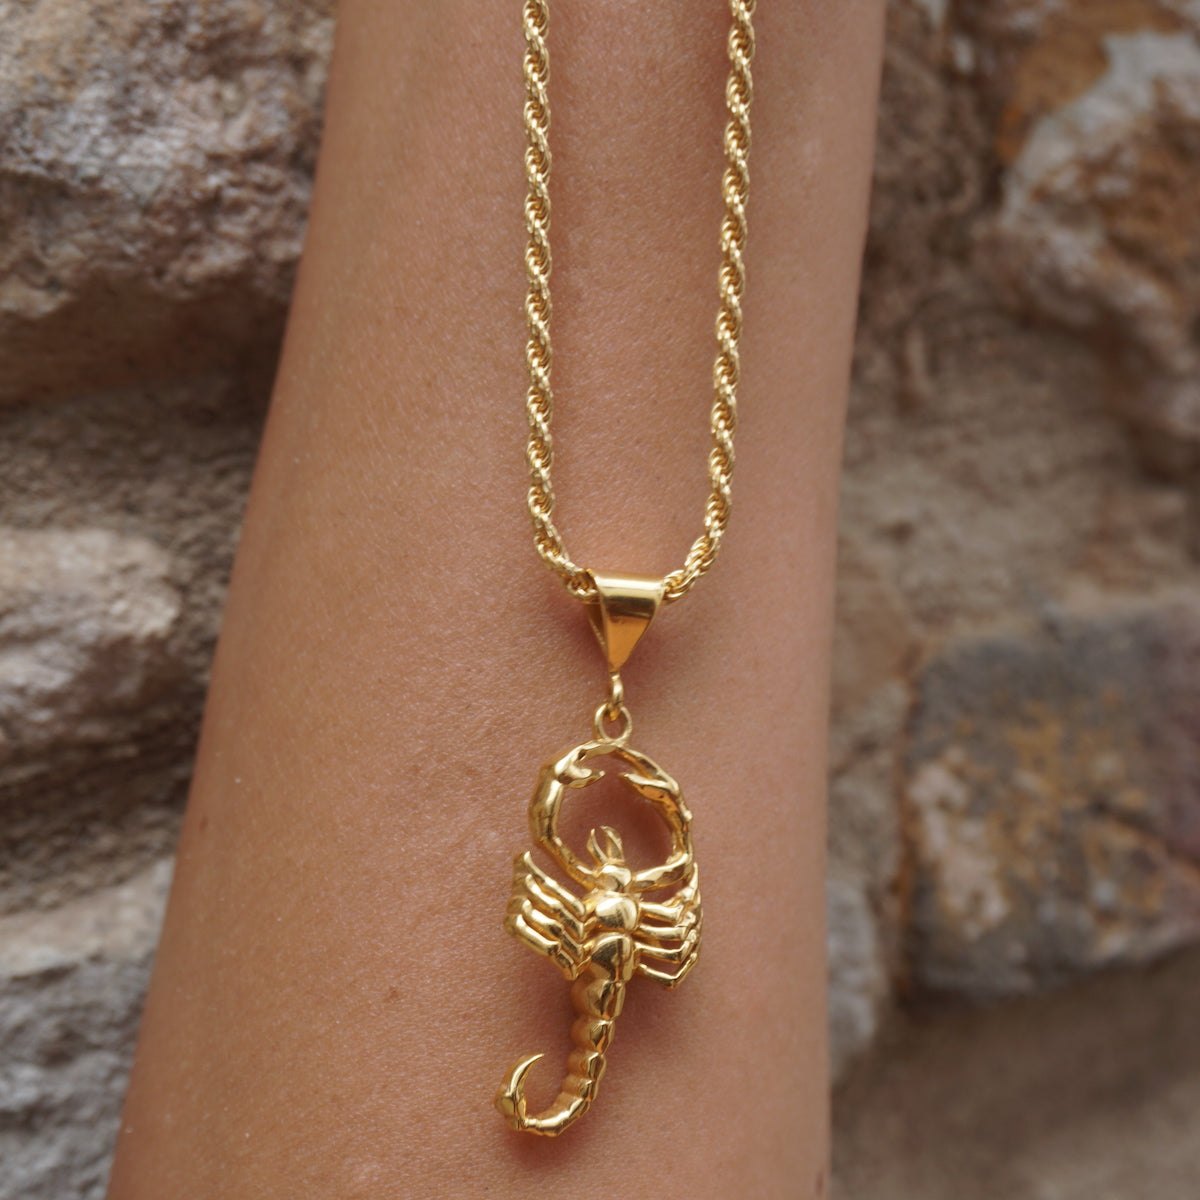 The Scorpio Necklace - gold